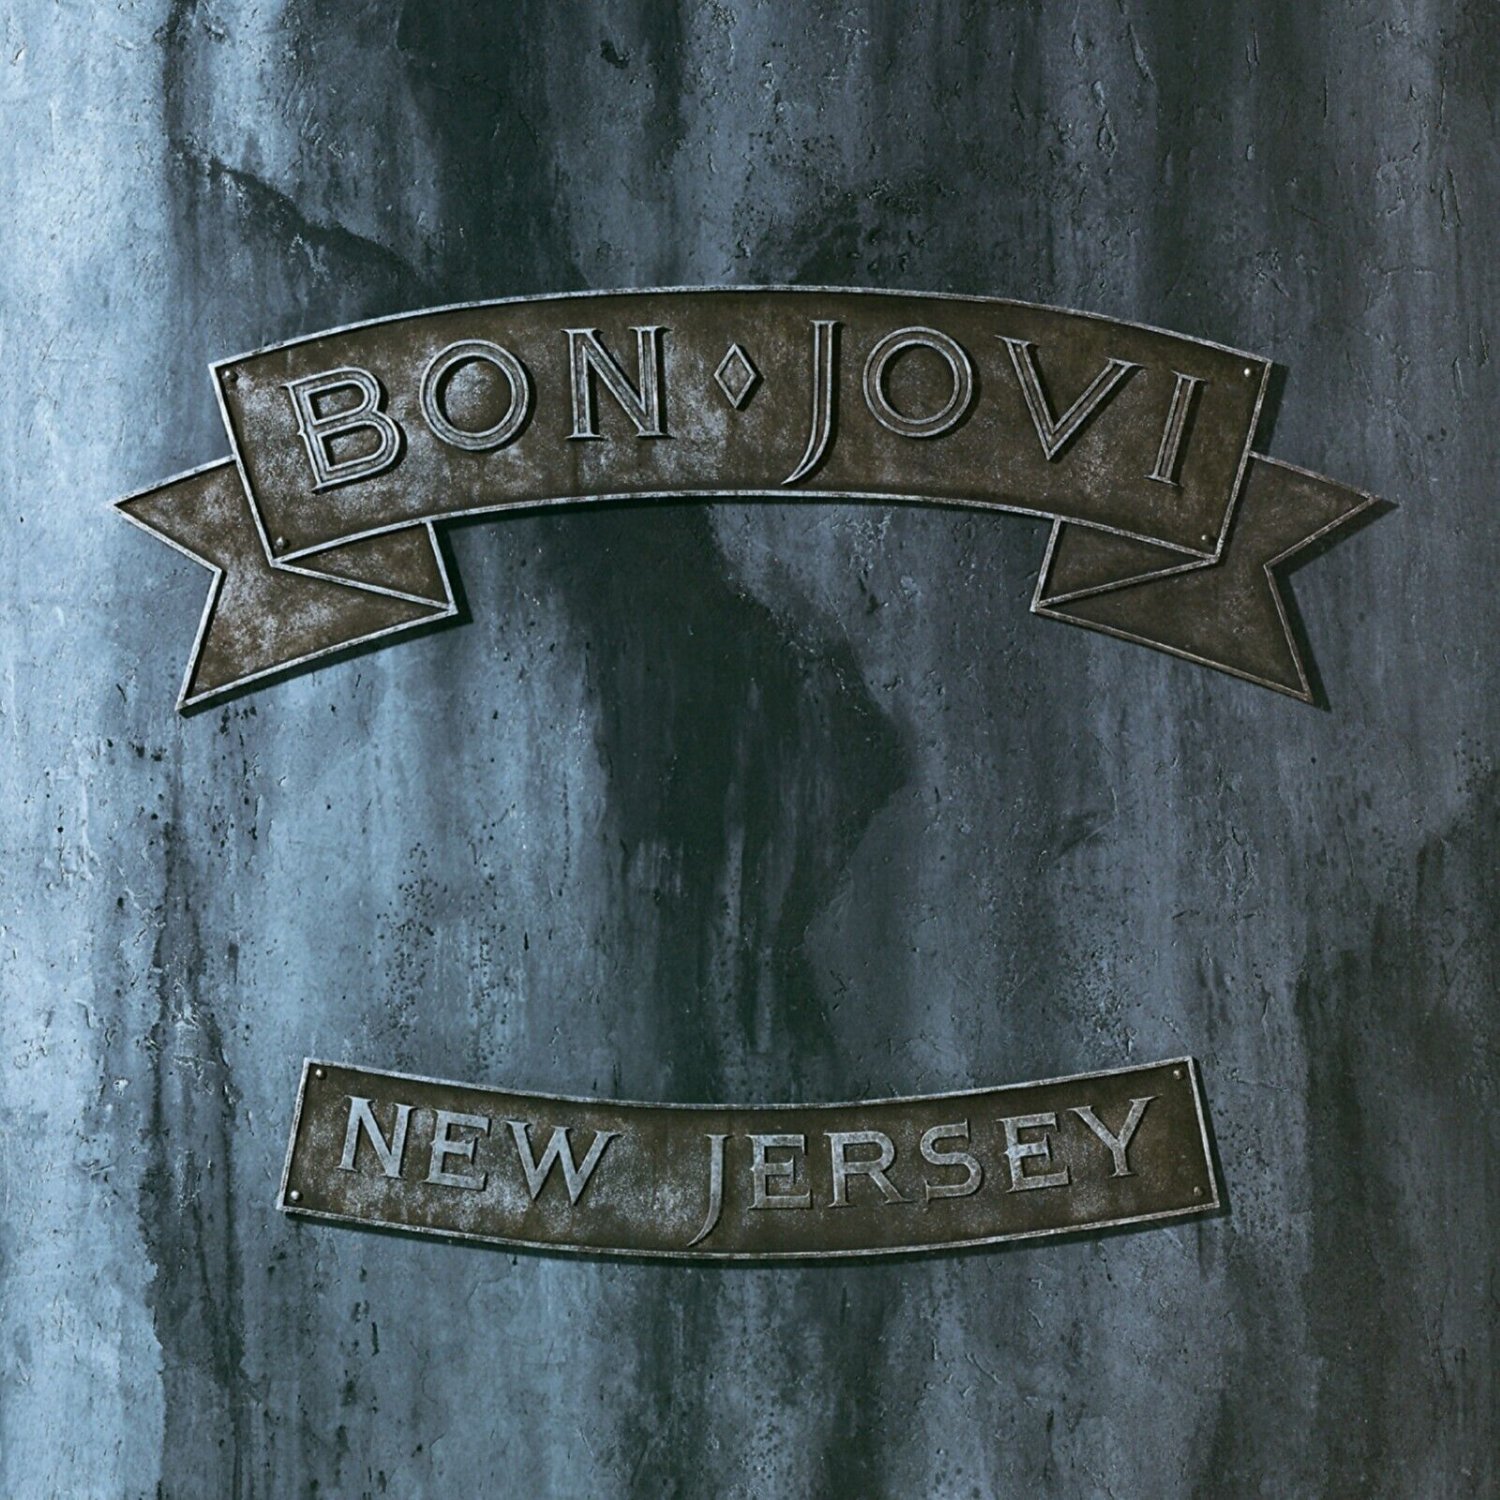 BON JOVI New Jersey BANNER HUGE 4X4 Ft Fabric Poster Tapestry Flag album art